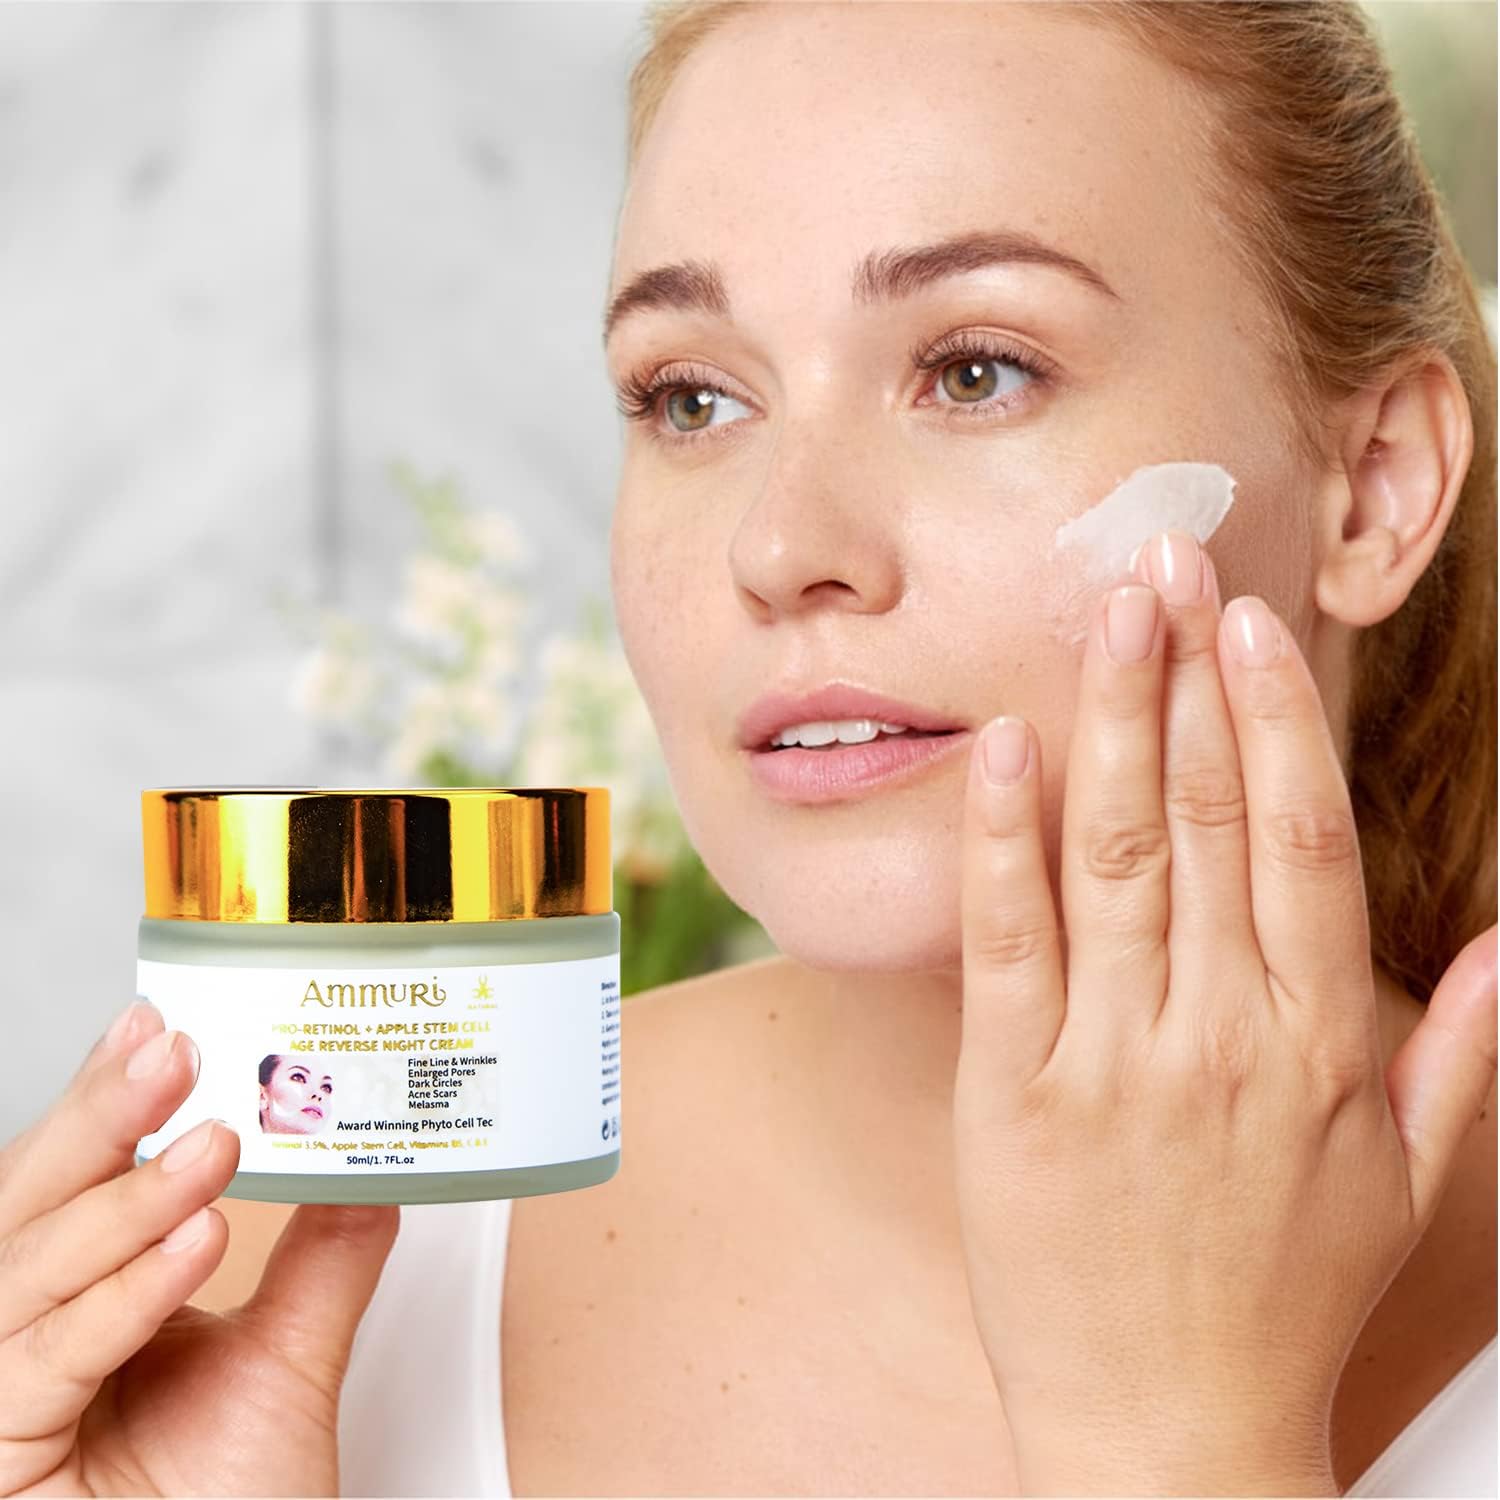 Apple Stem Cell Age Reverse 3.5% Retinol Cream Youthful Radiance skin Ammuri Skincare